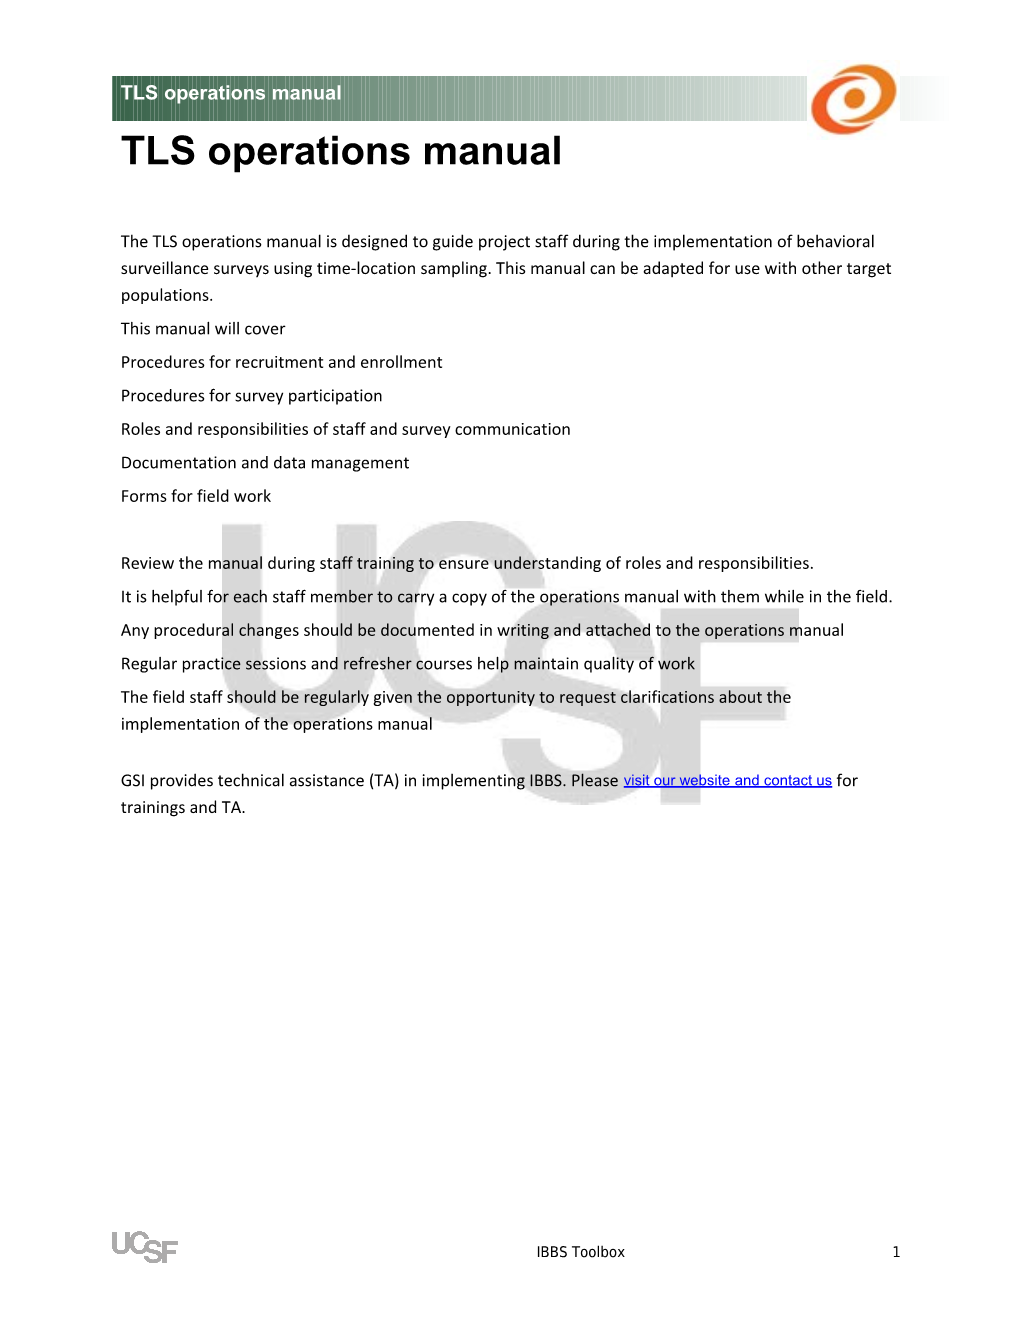 TLS Operations Manual